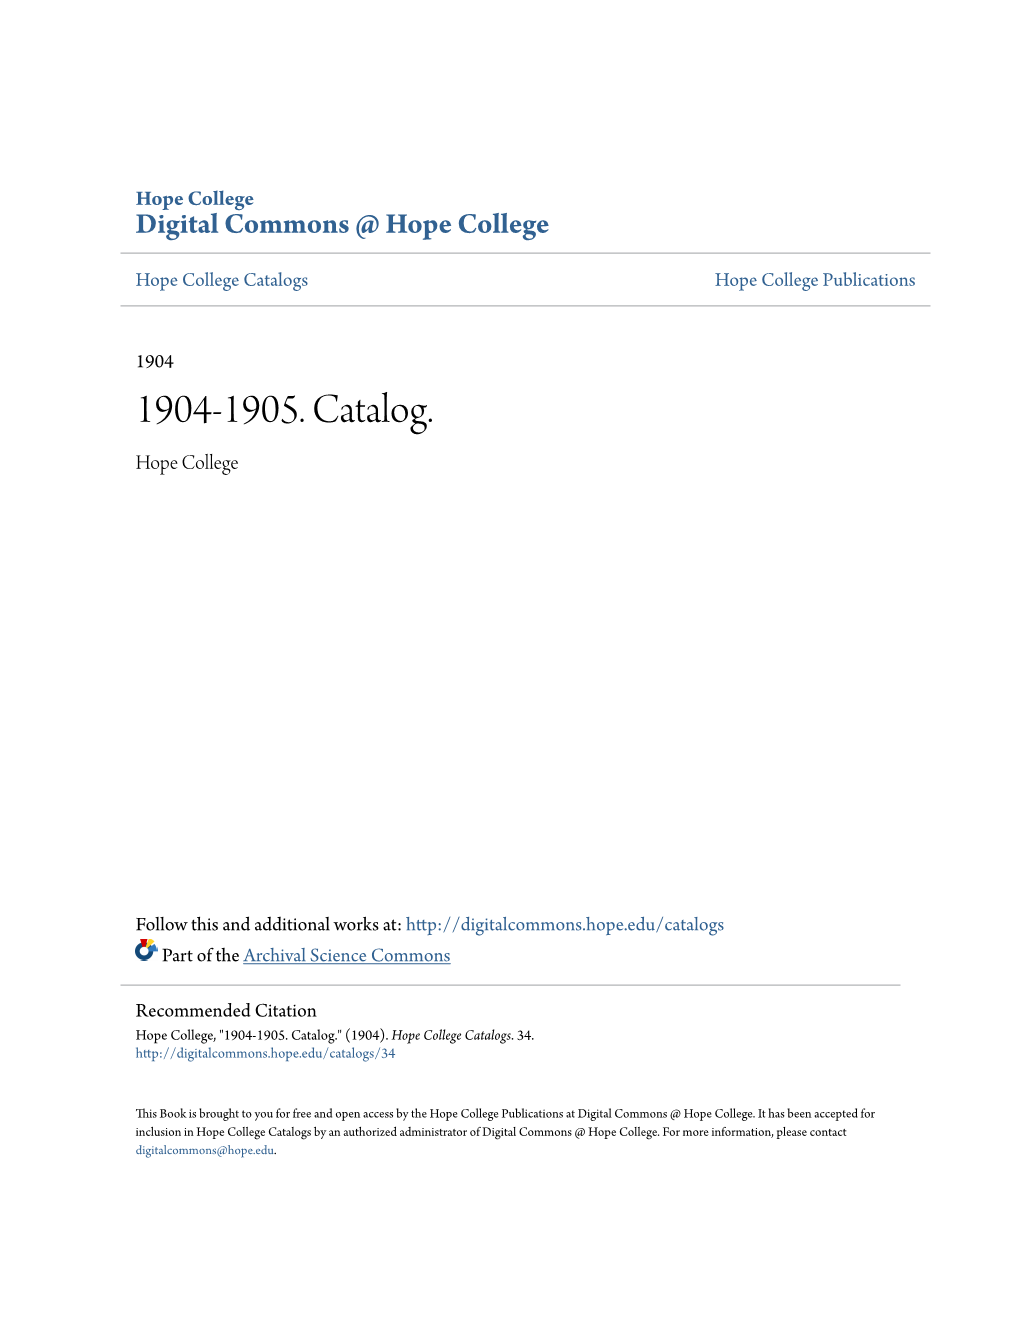 1904-1905. Catalog. Hope College